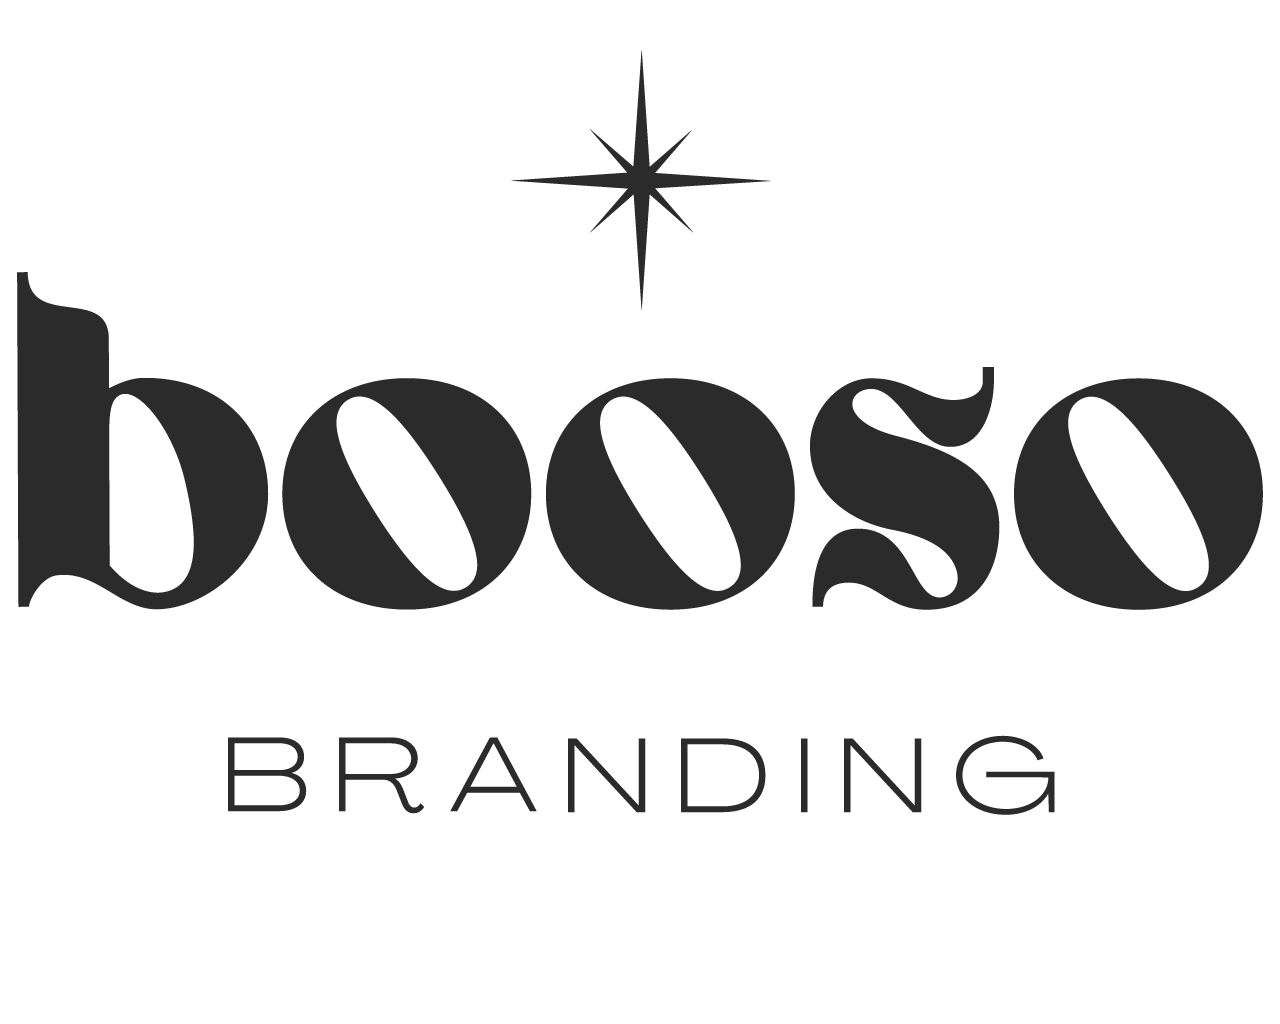 Booso Branding